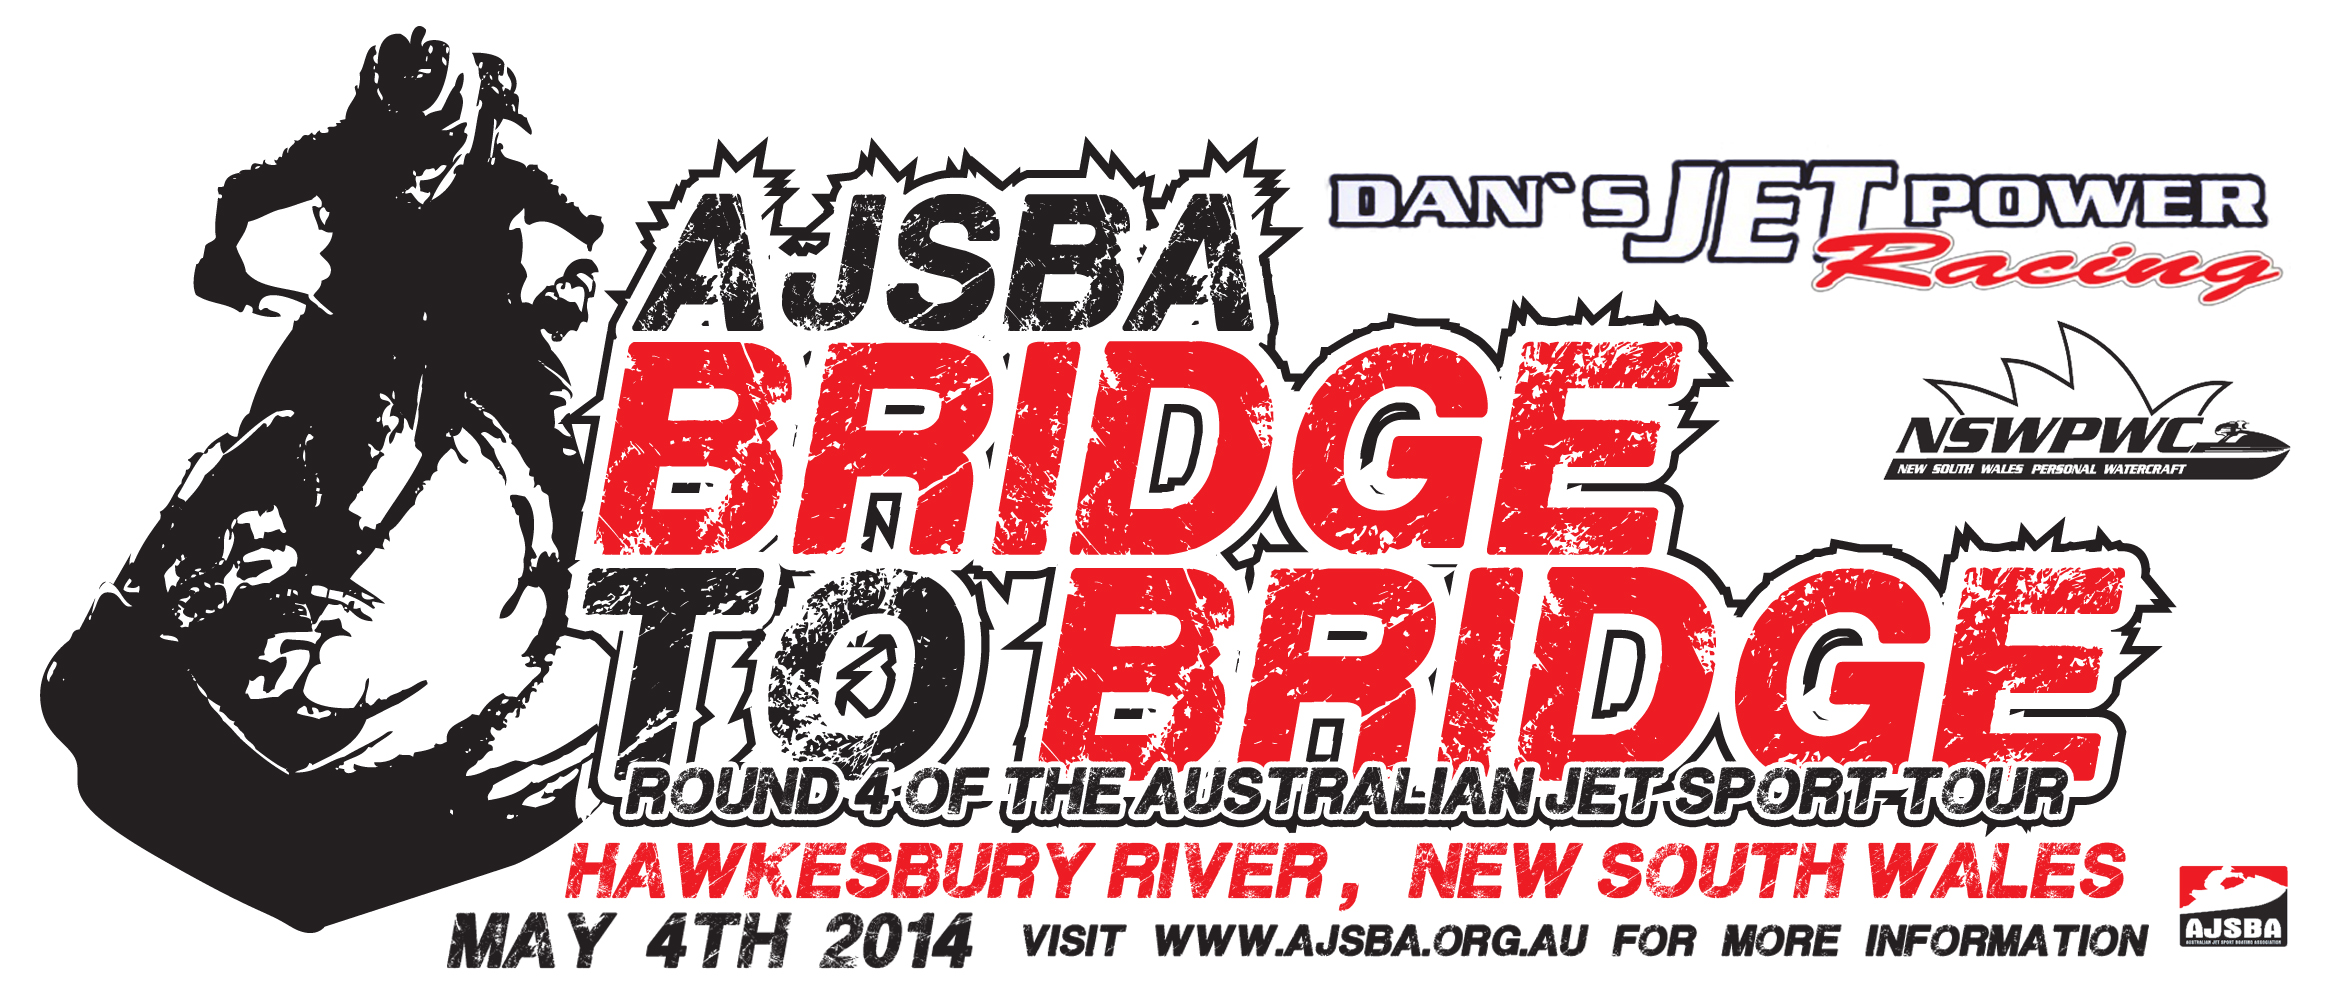 AJSBA & NSWPWC BRIDGE TO BRIDGE SUNDAY 4th MAY 2014